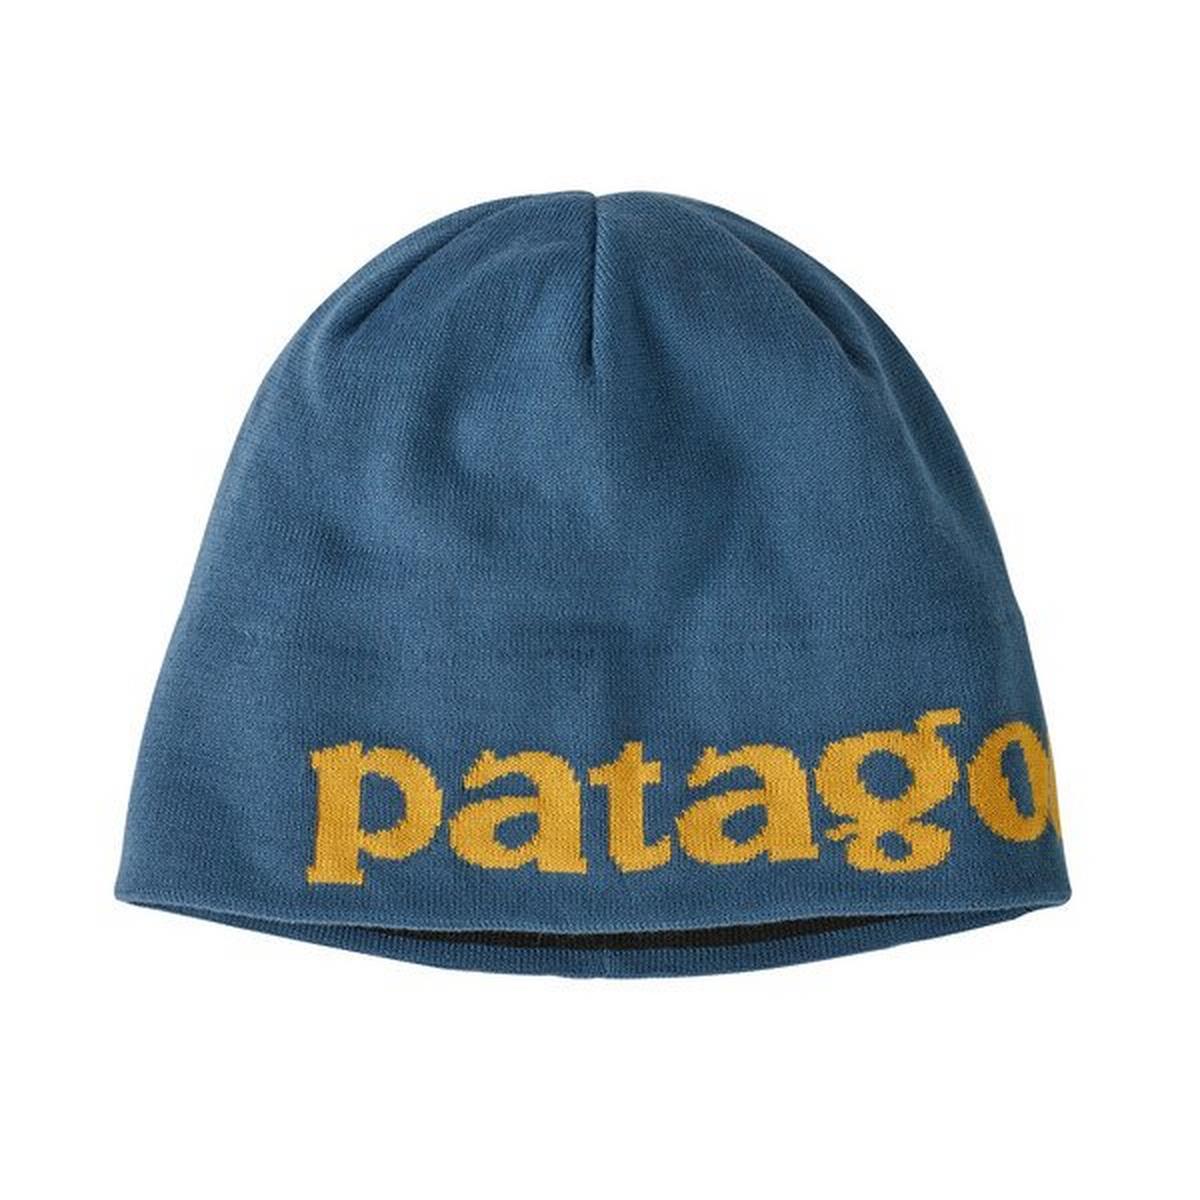 Patagonia Beanie Hat - Logo Wavy Blue